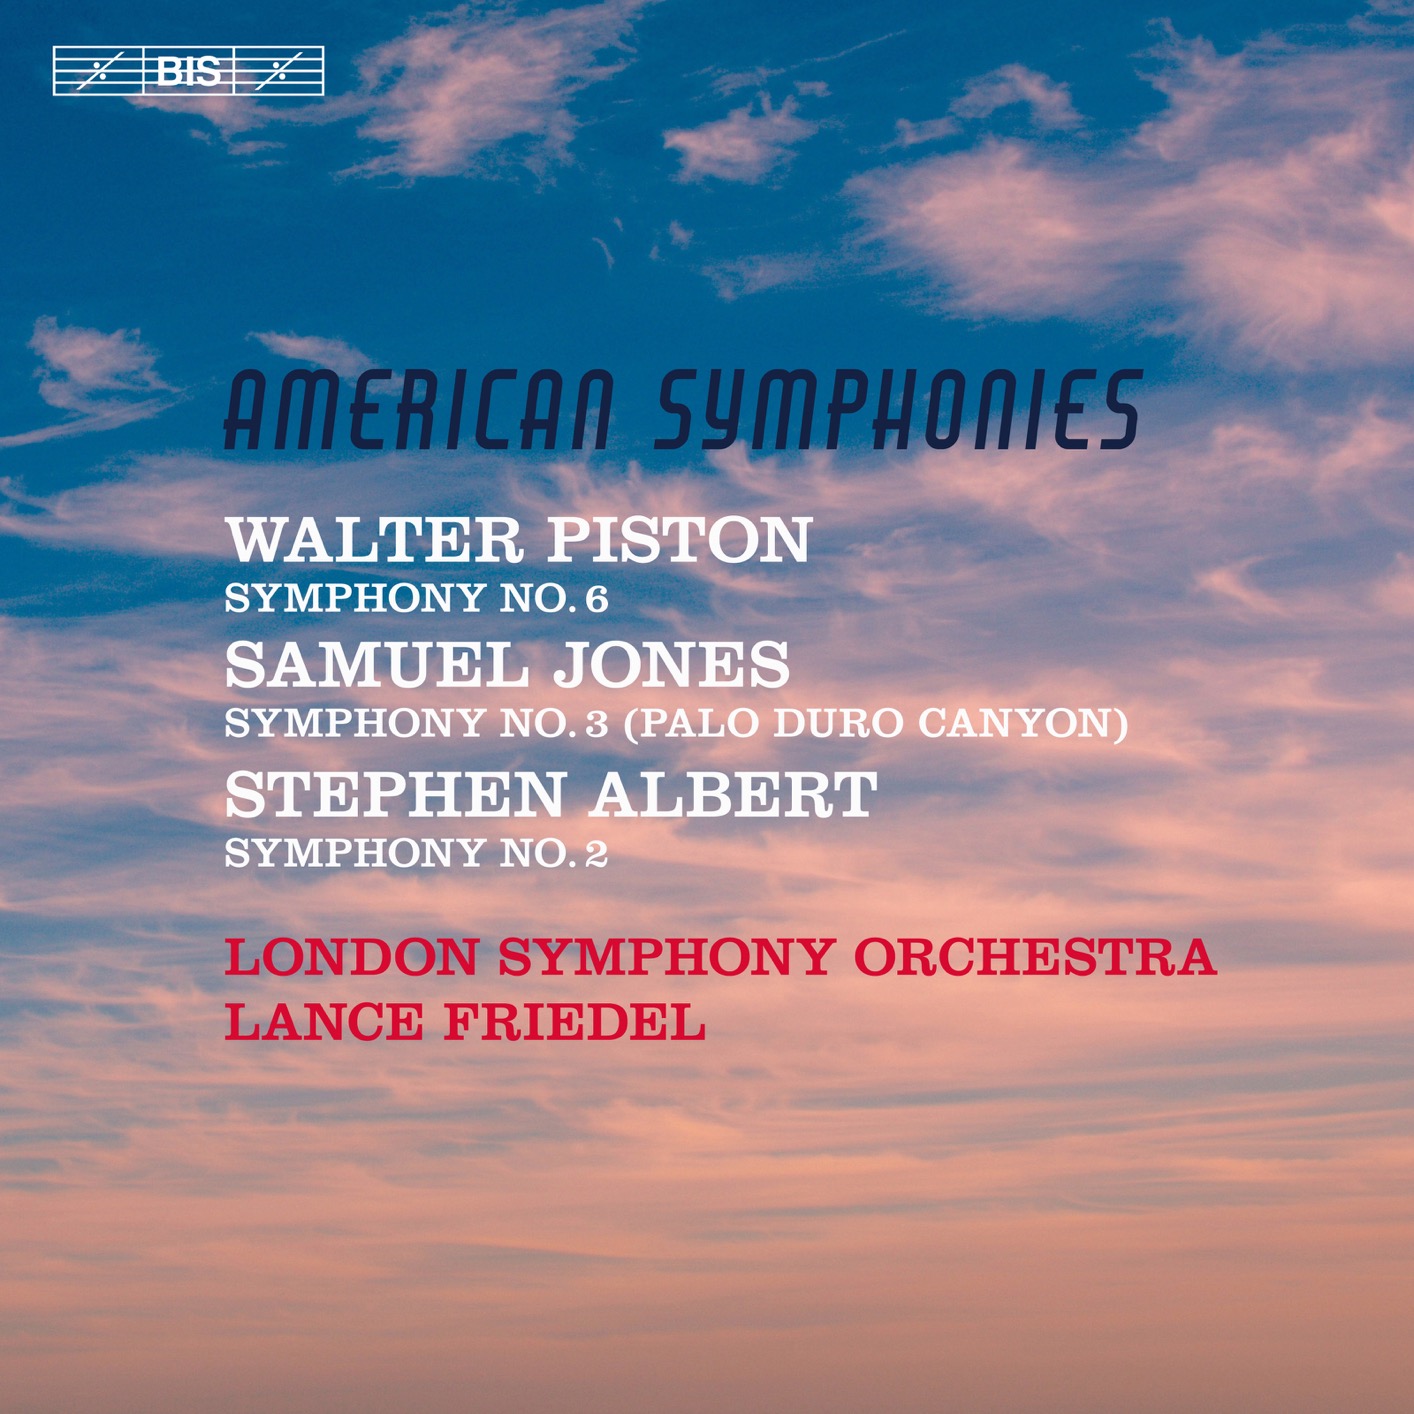 London Symphony Orchestra & Lance Friedel – American Symphonies (2018) [FLAC 24bit/96kHz]